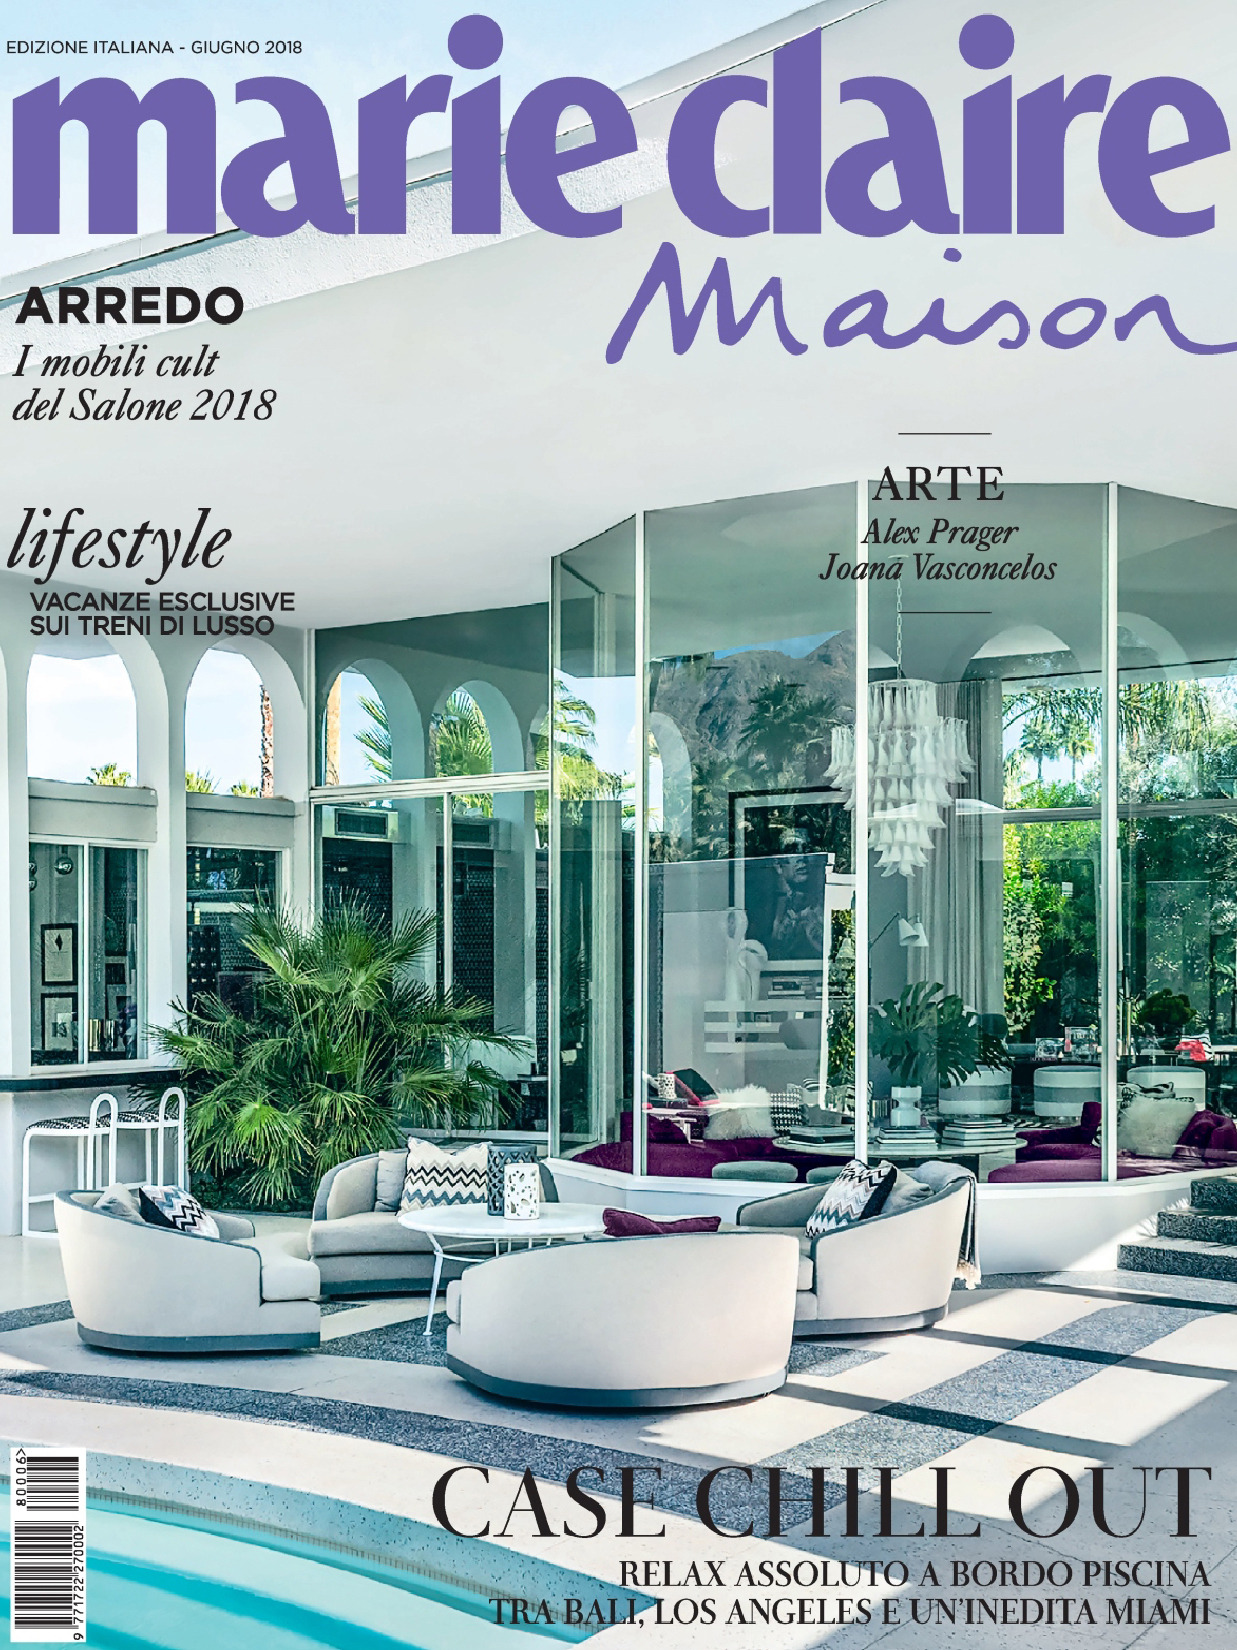 《Marie Claire maison》意大利版时尚室内设计杂志2018年6月号